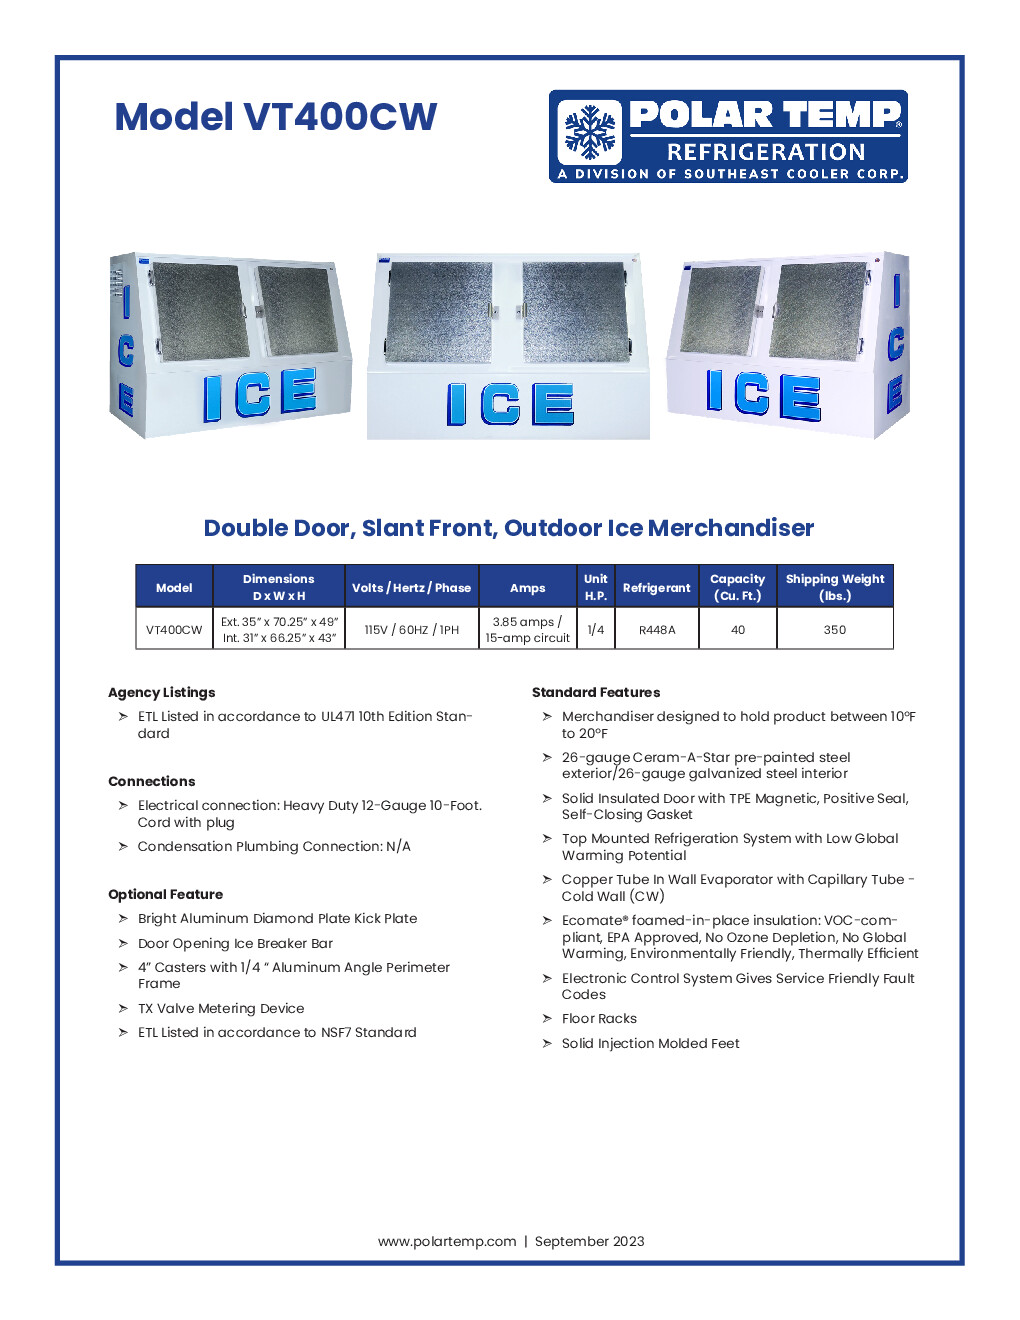 Polar Temp VT400CW Ice Merchandiser